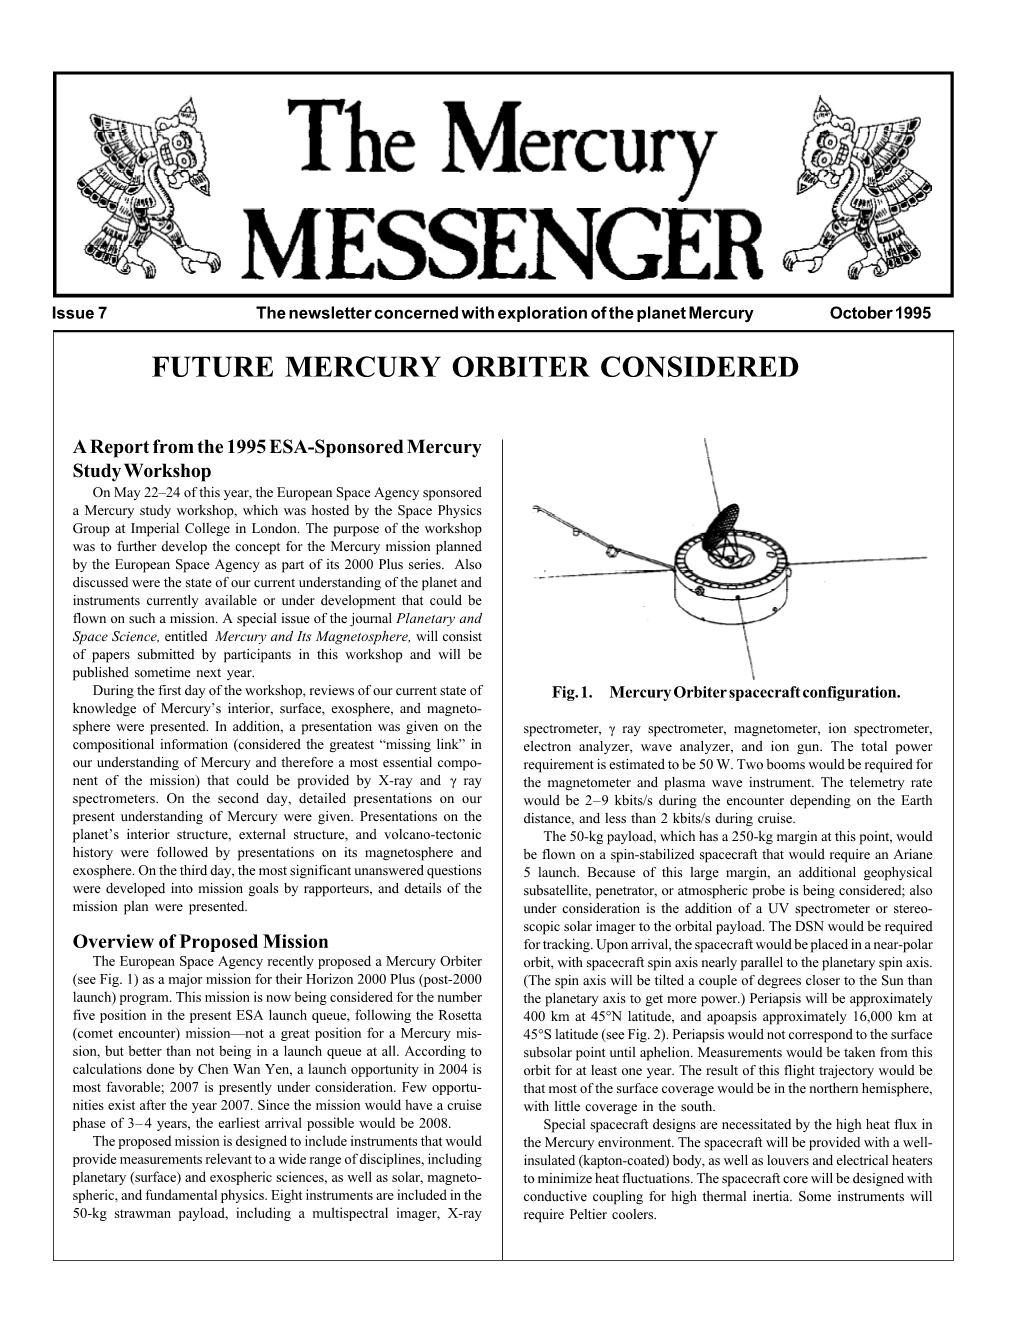 Issue 7, October 1995